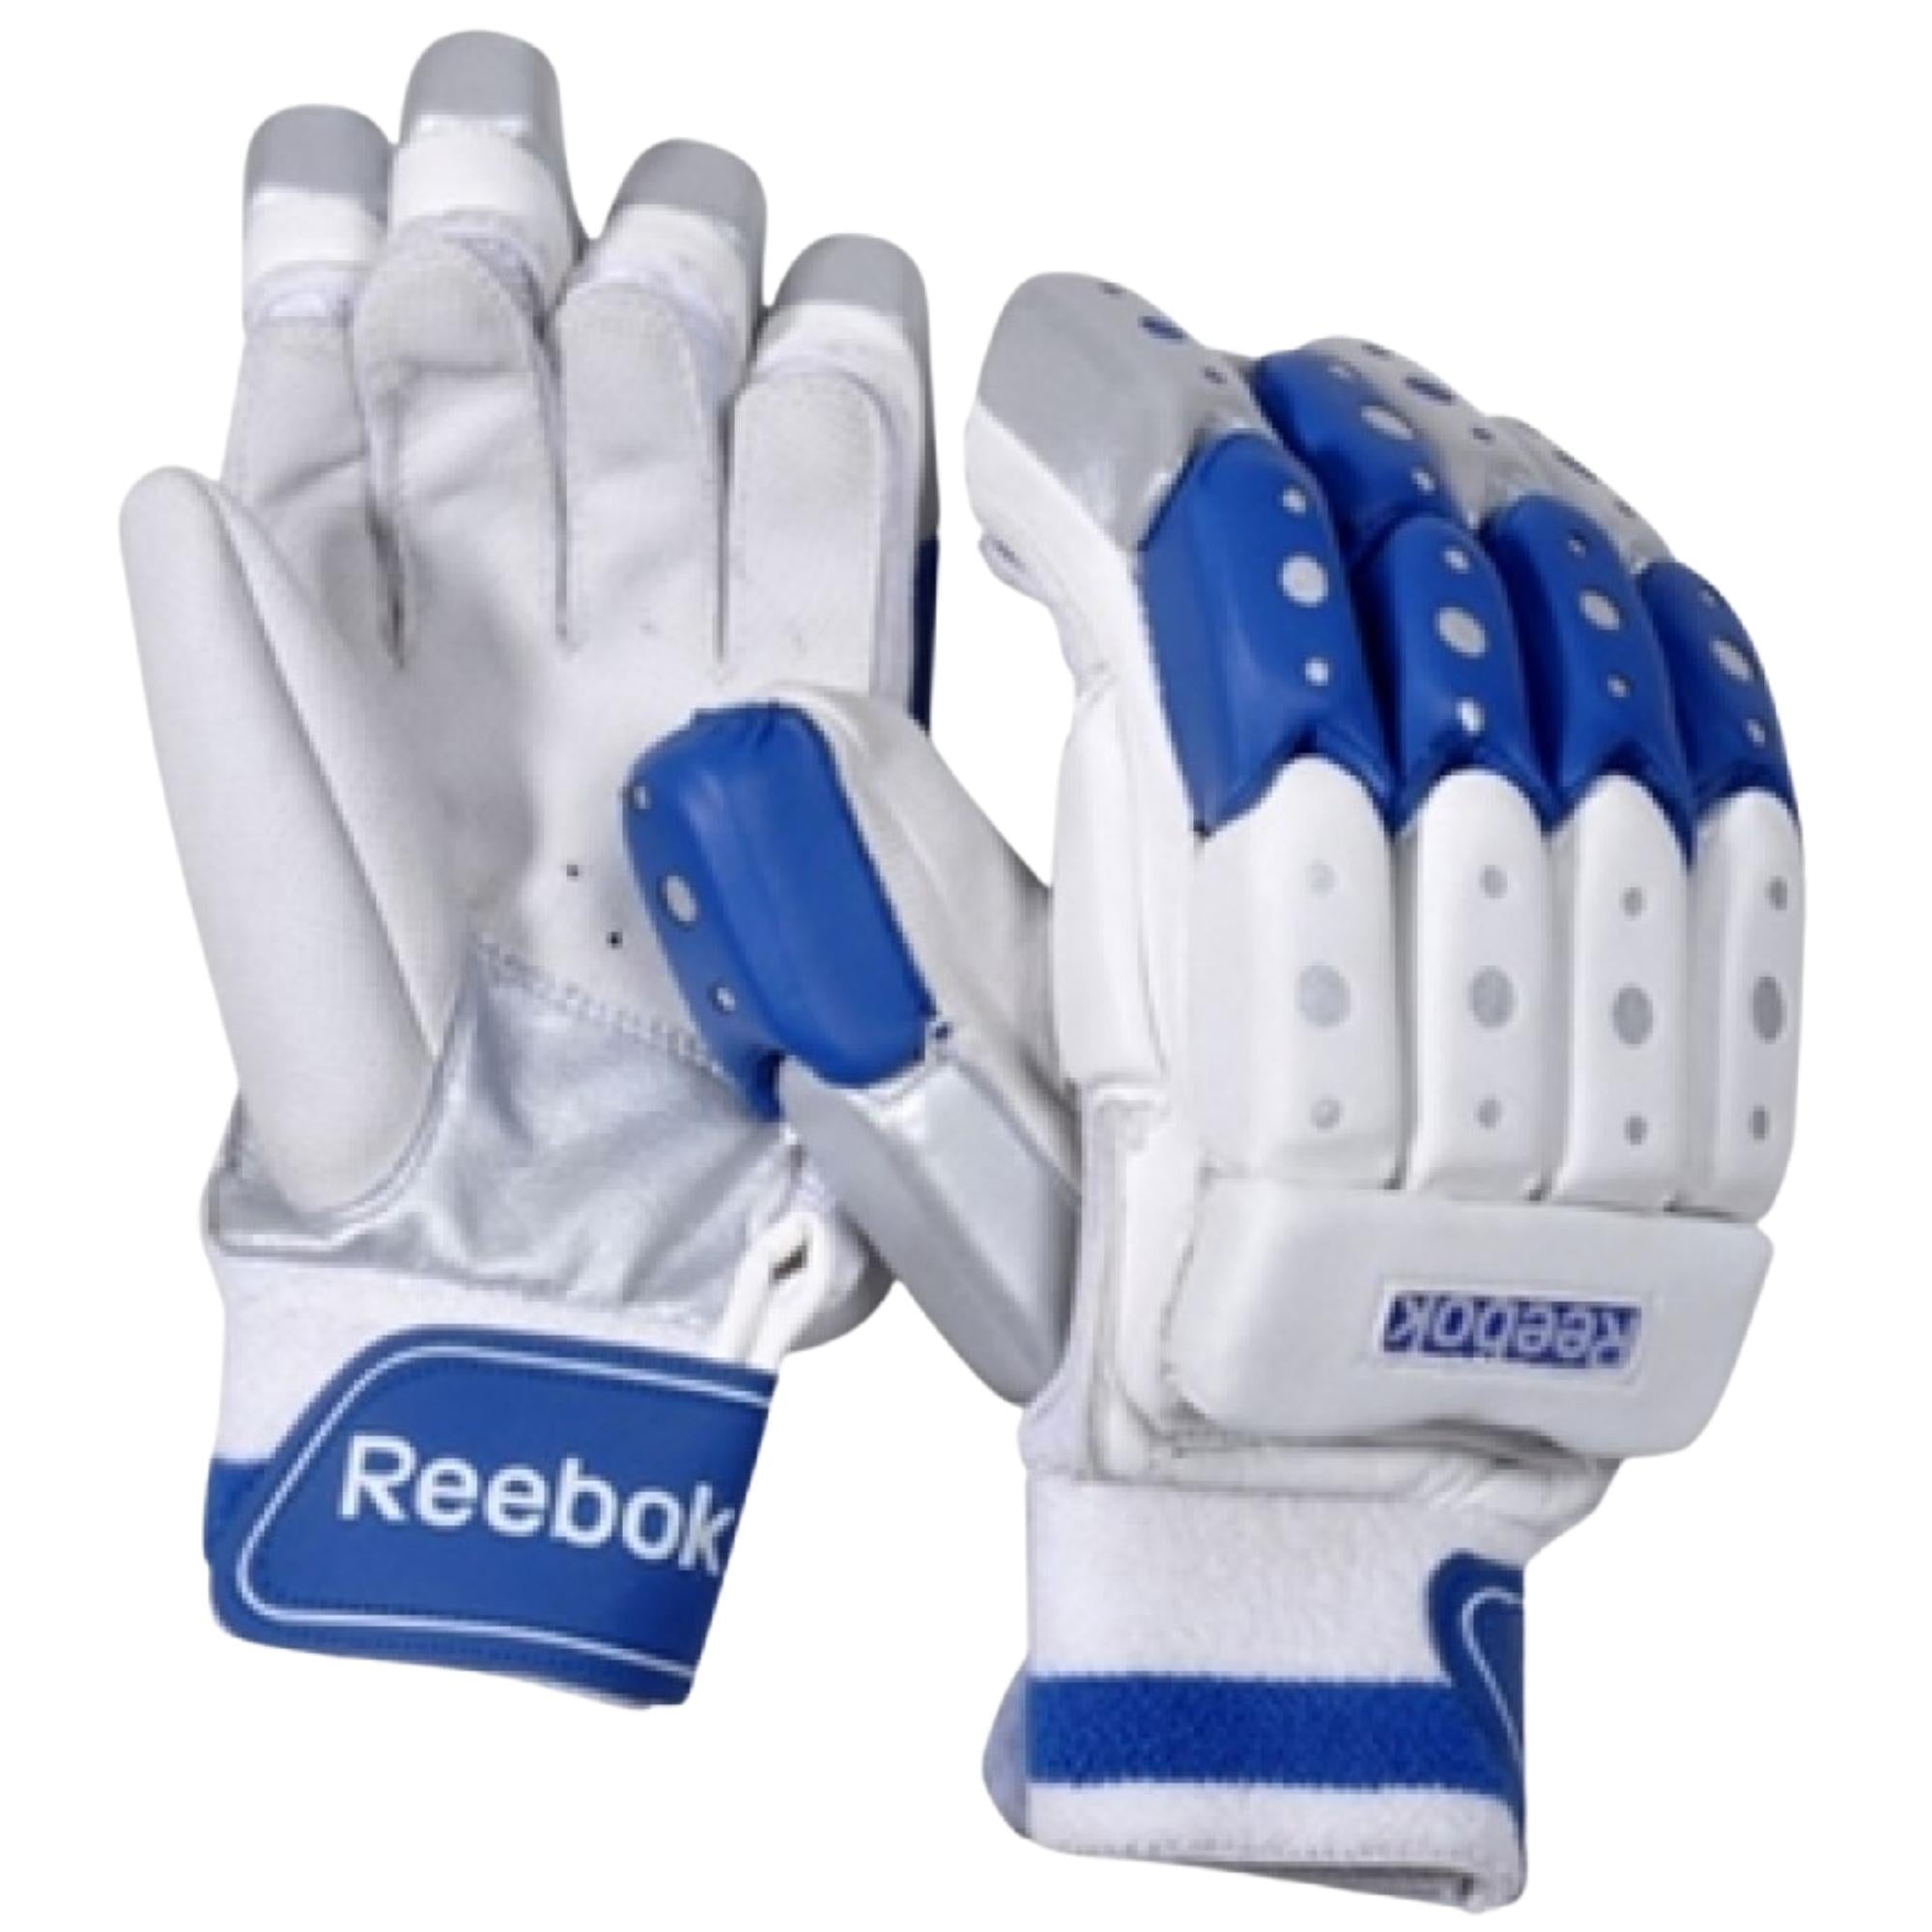 Reebok Limited Edition Batting Gloves